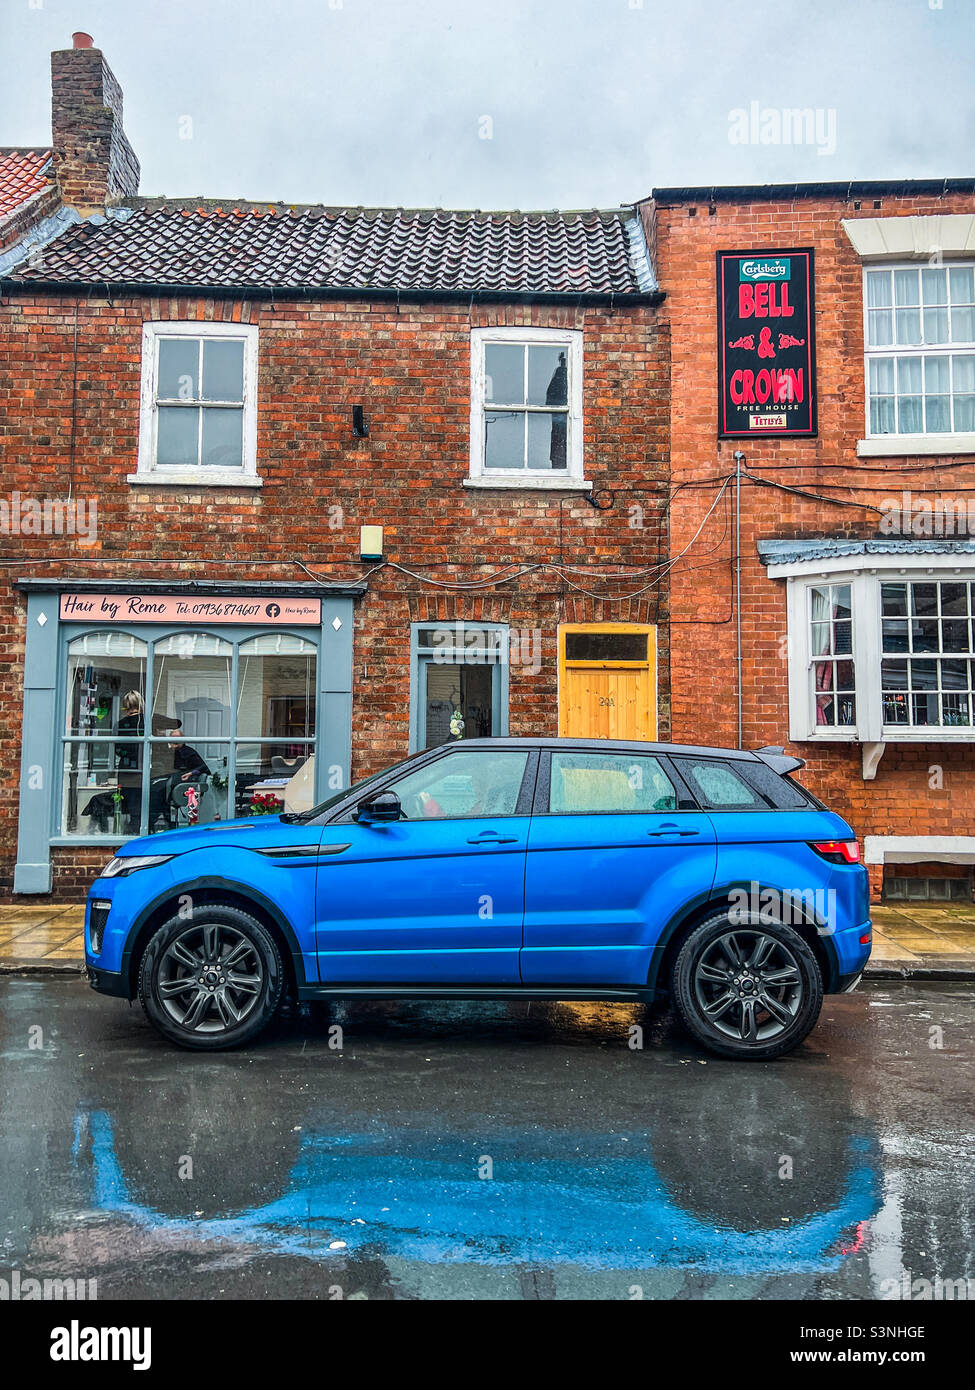 Bright blue Range Rover Evoque car parked on road in urban village Stock Photo